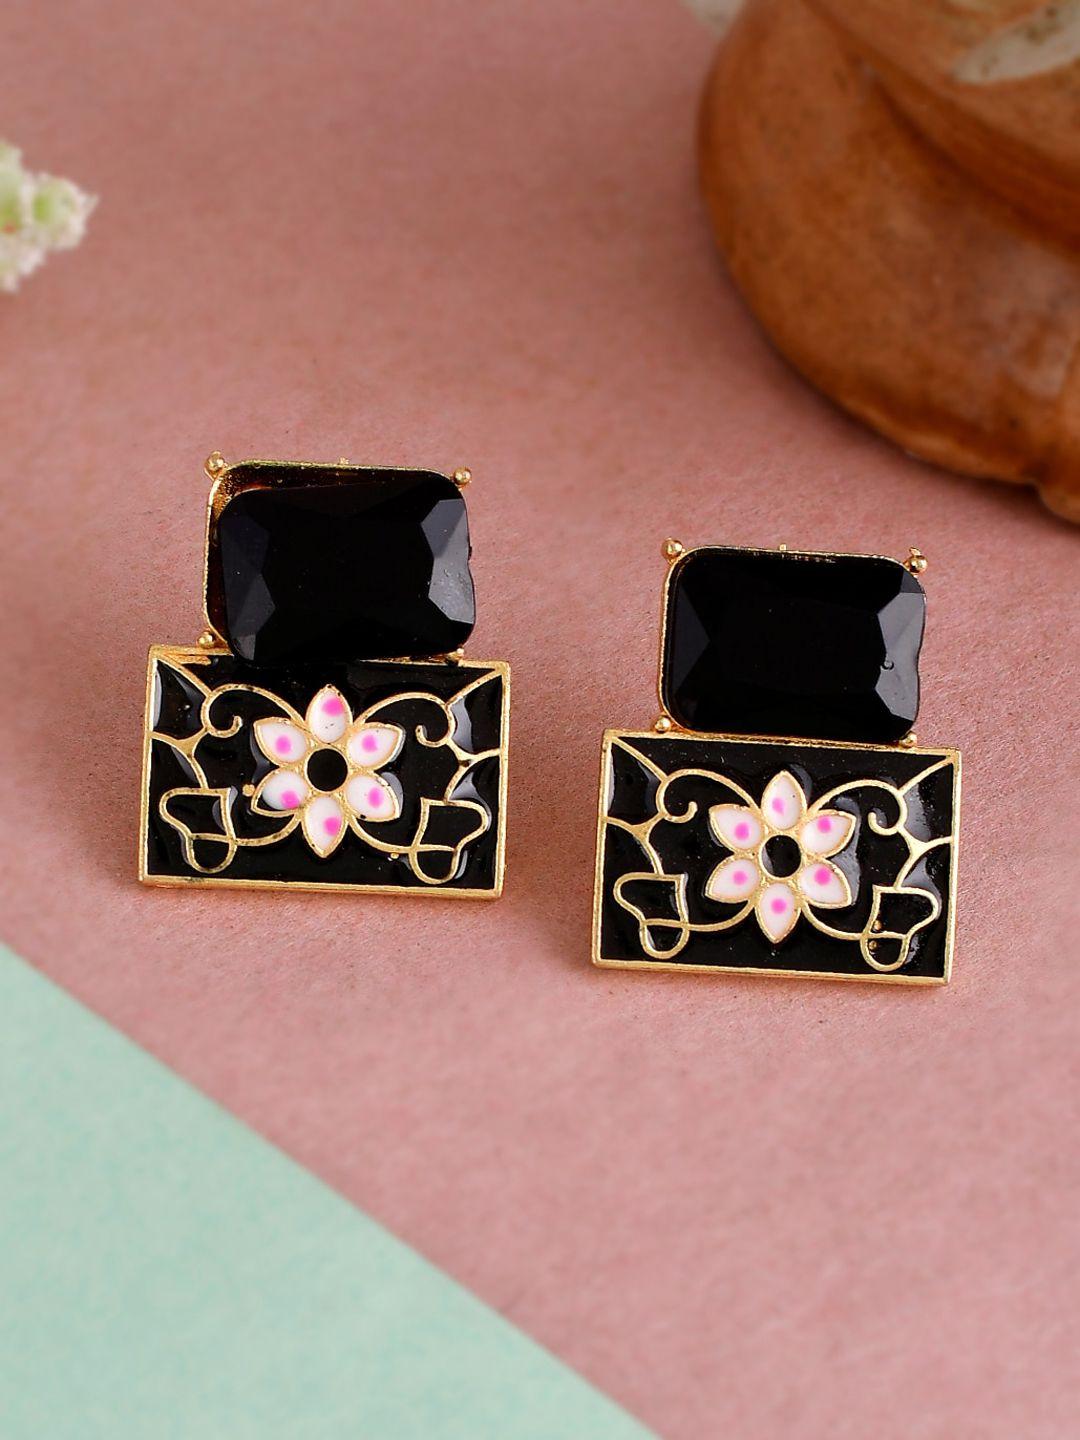 silvermerc designs black square studs earrings